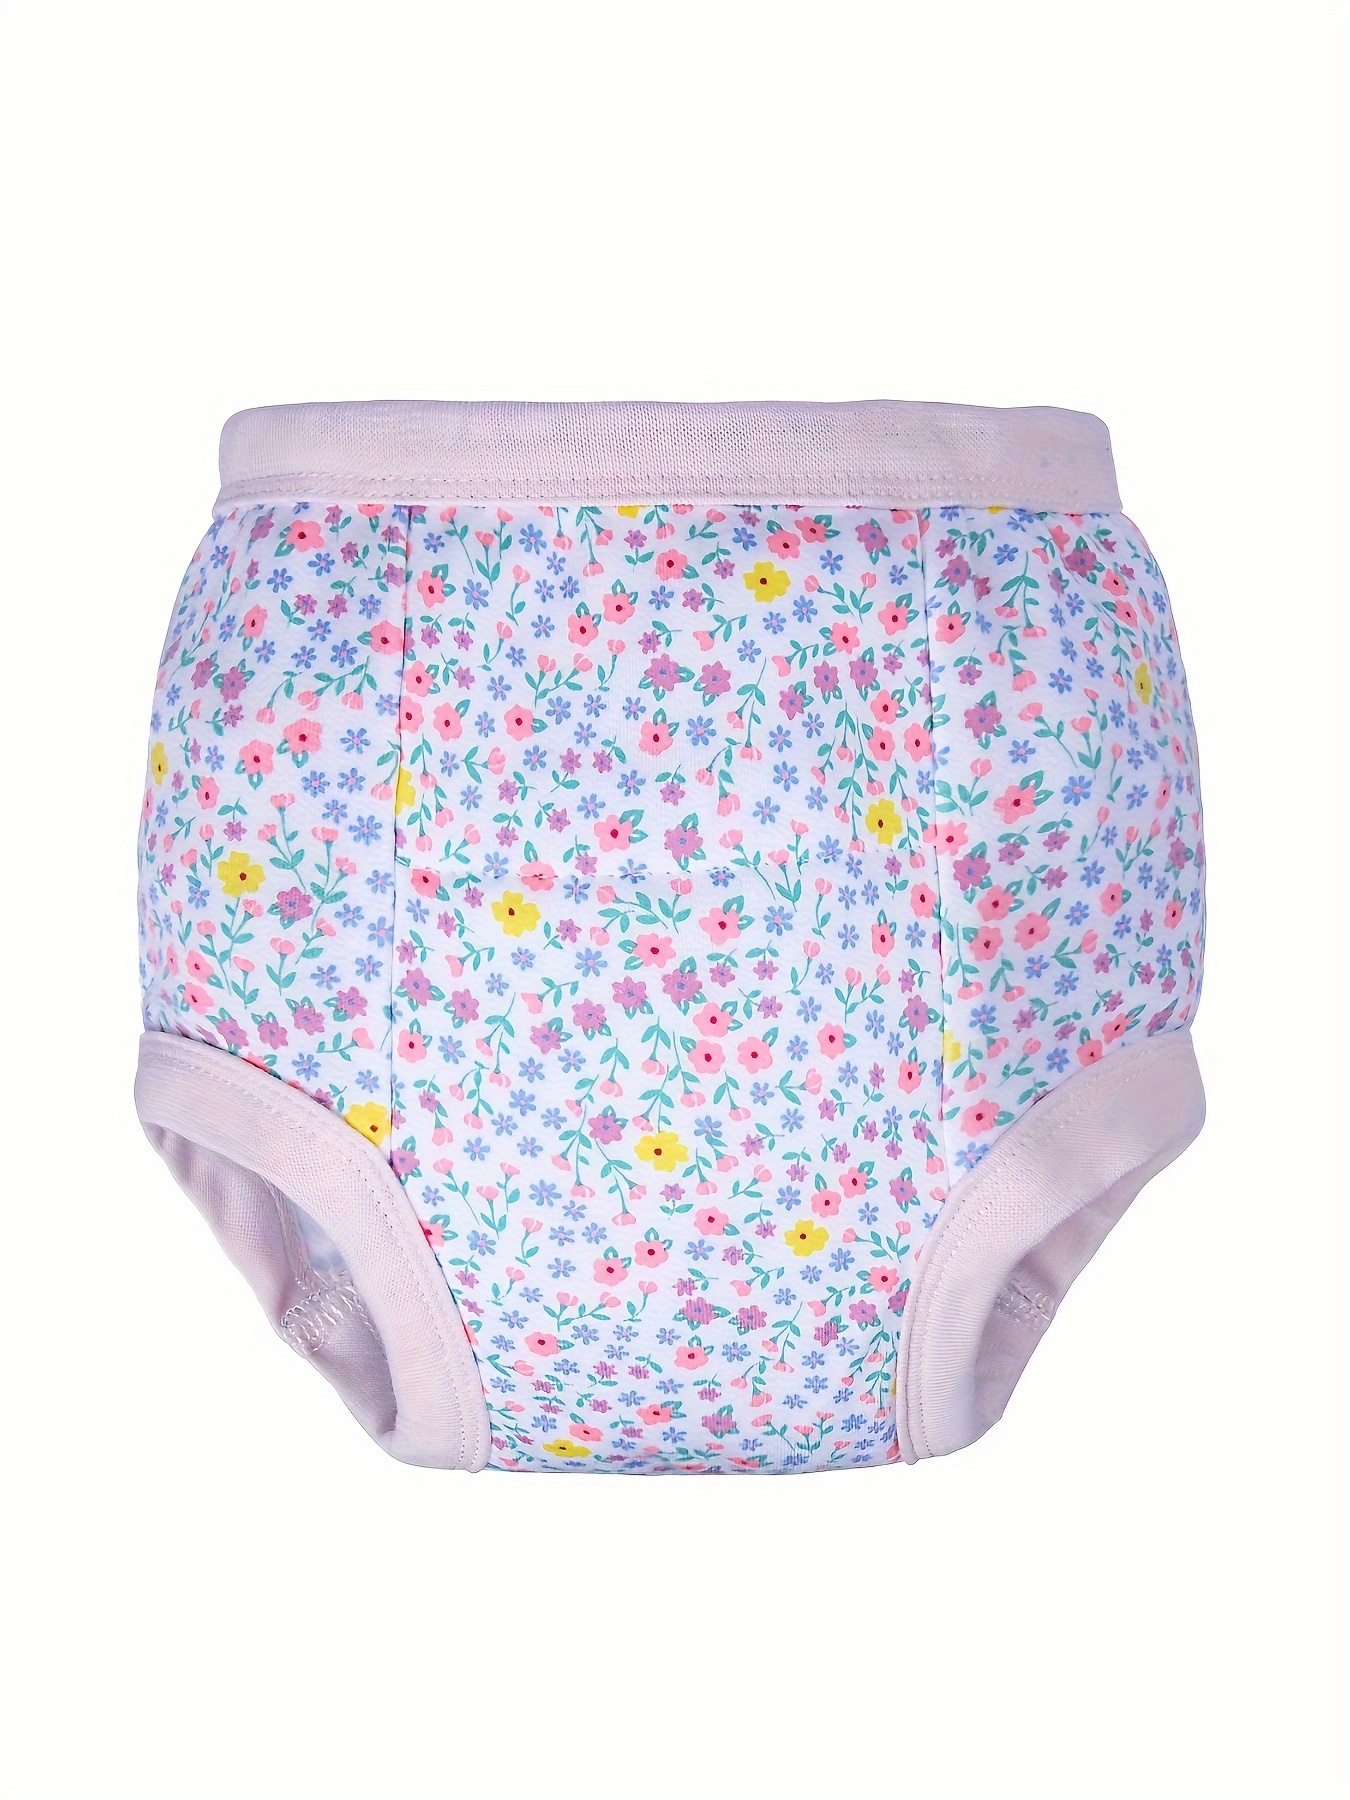 Baby Girls Cotton Diaper Pants Girls Training Pants Washable